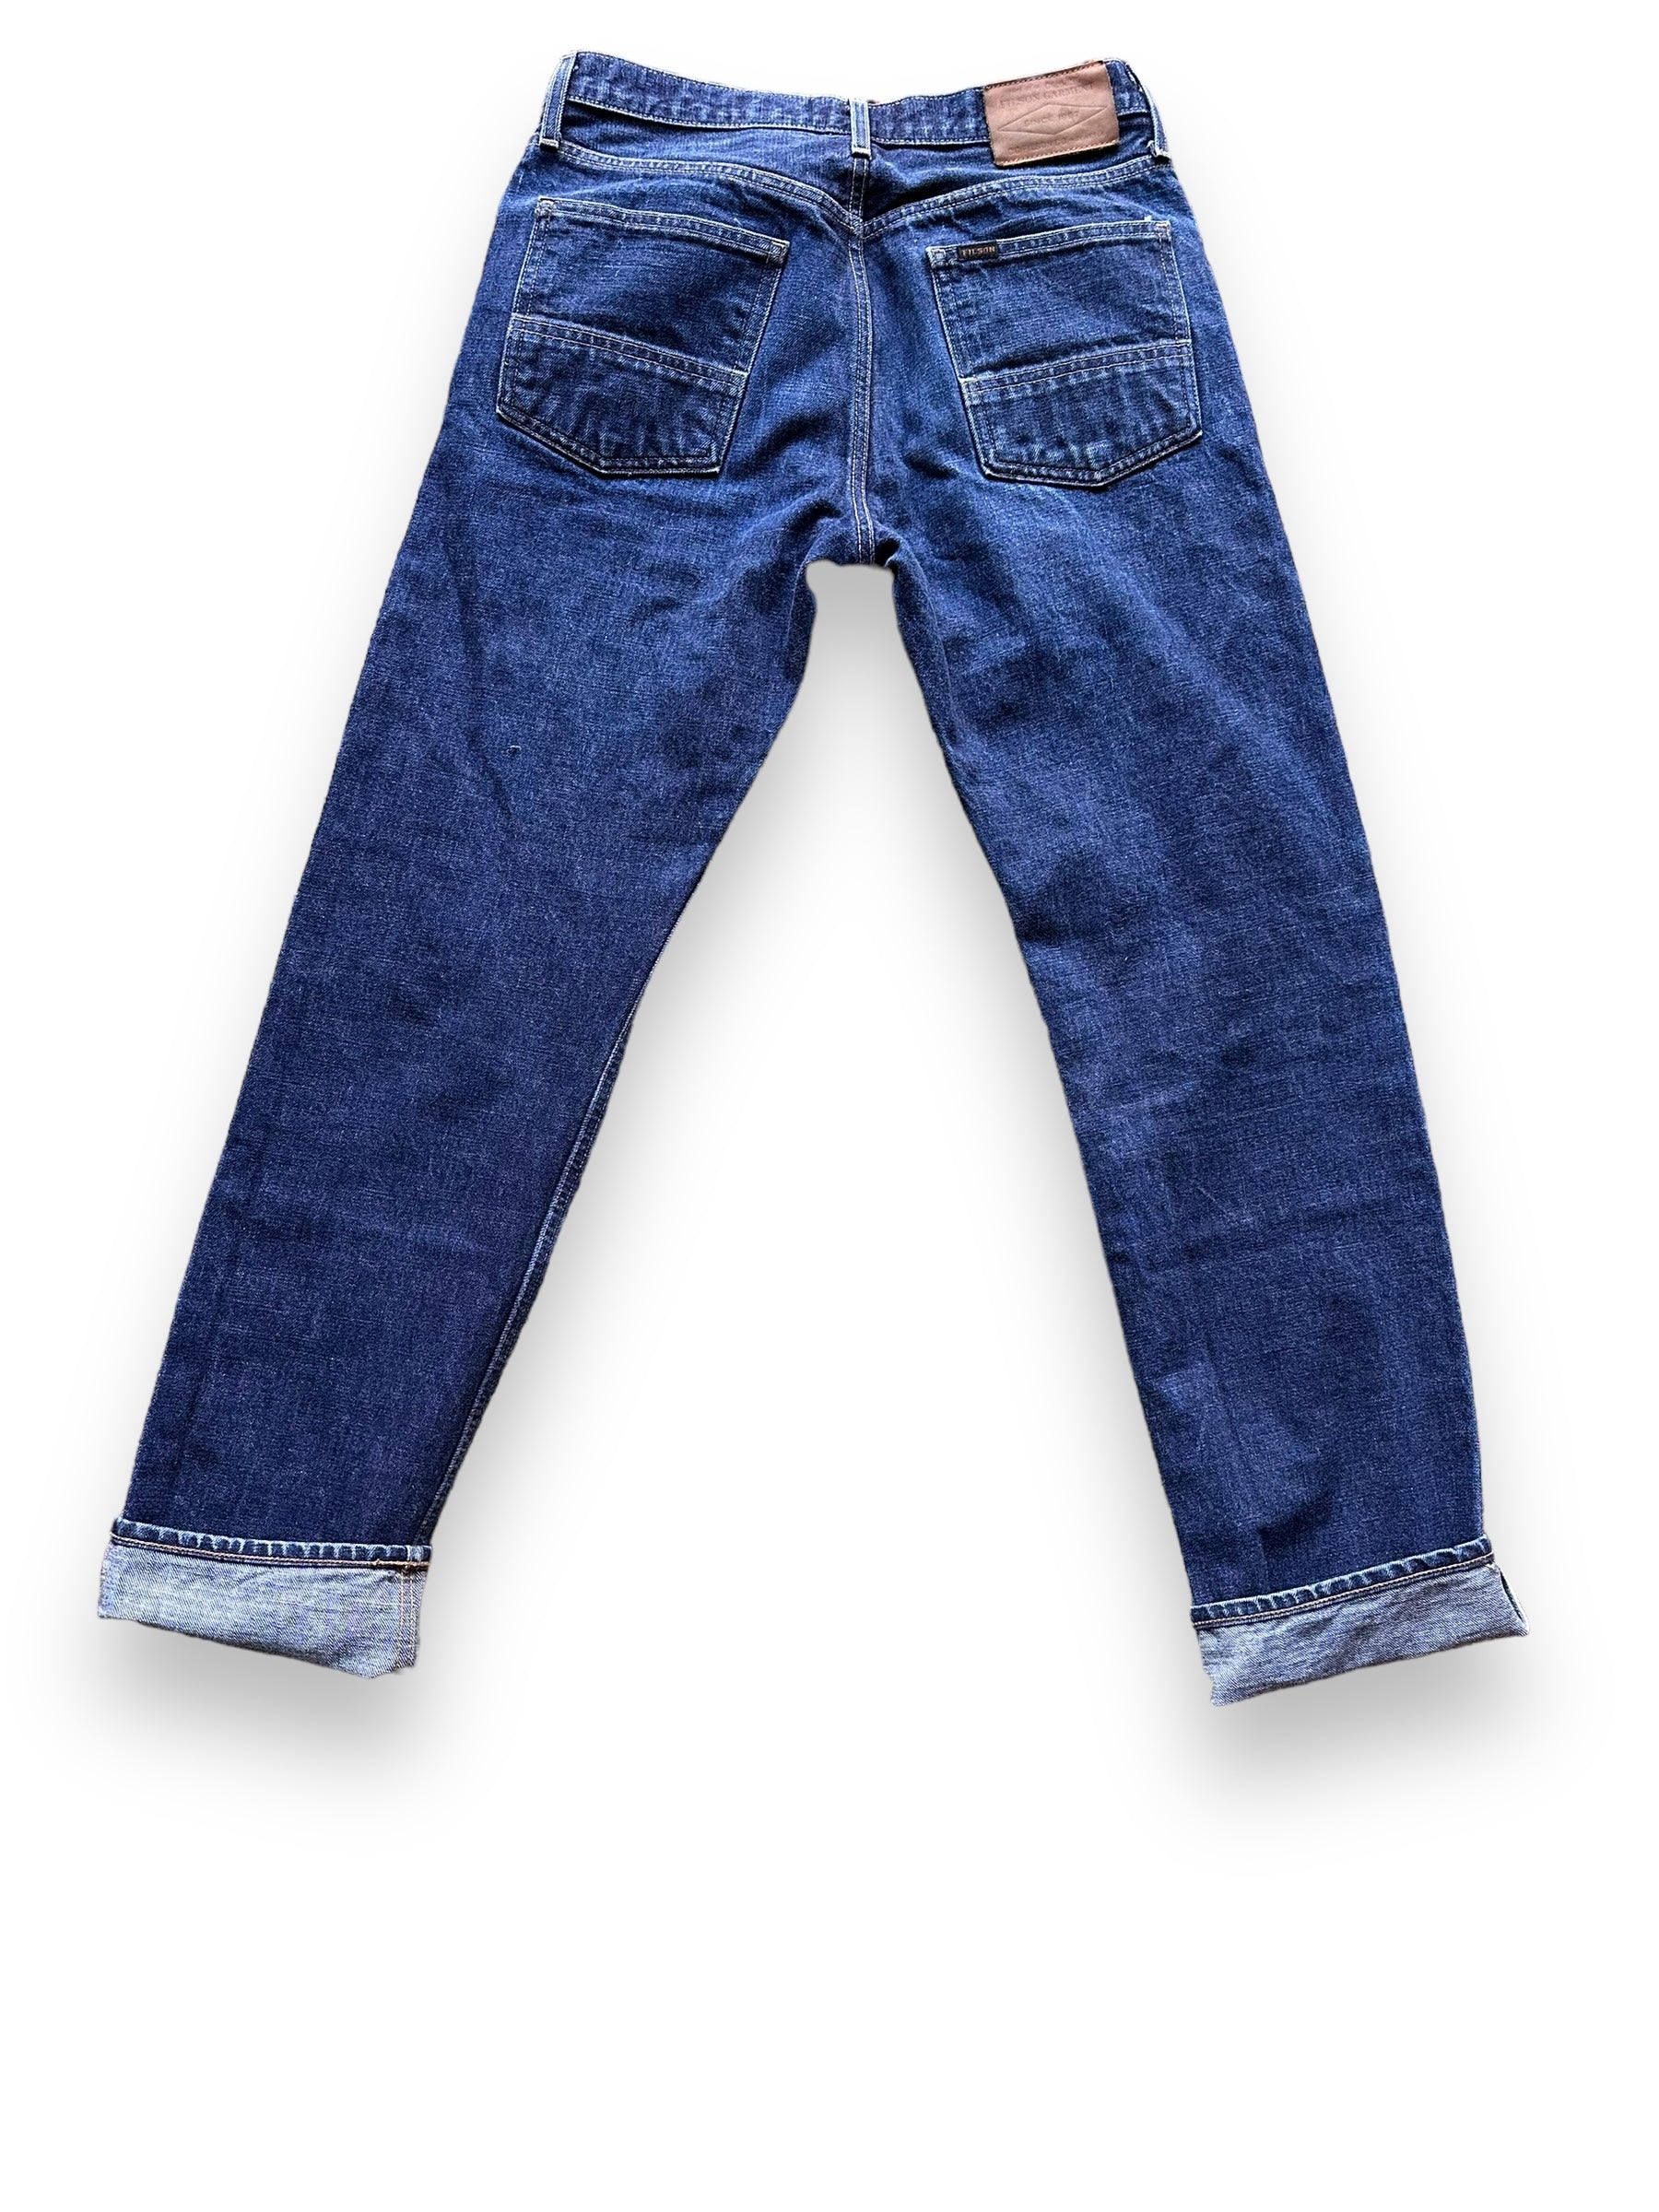 Rear View of Filson Selvedge Dungarees W31 |  Filson Jeans | Filson Denim Workwear Seattle